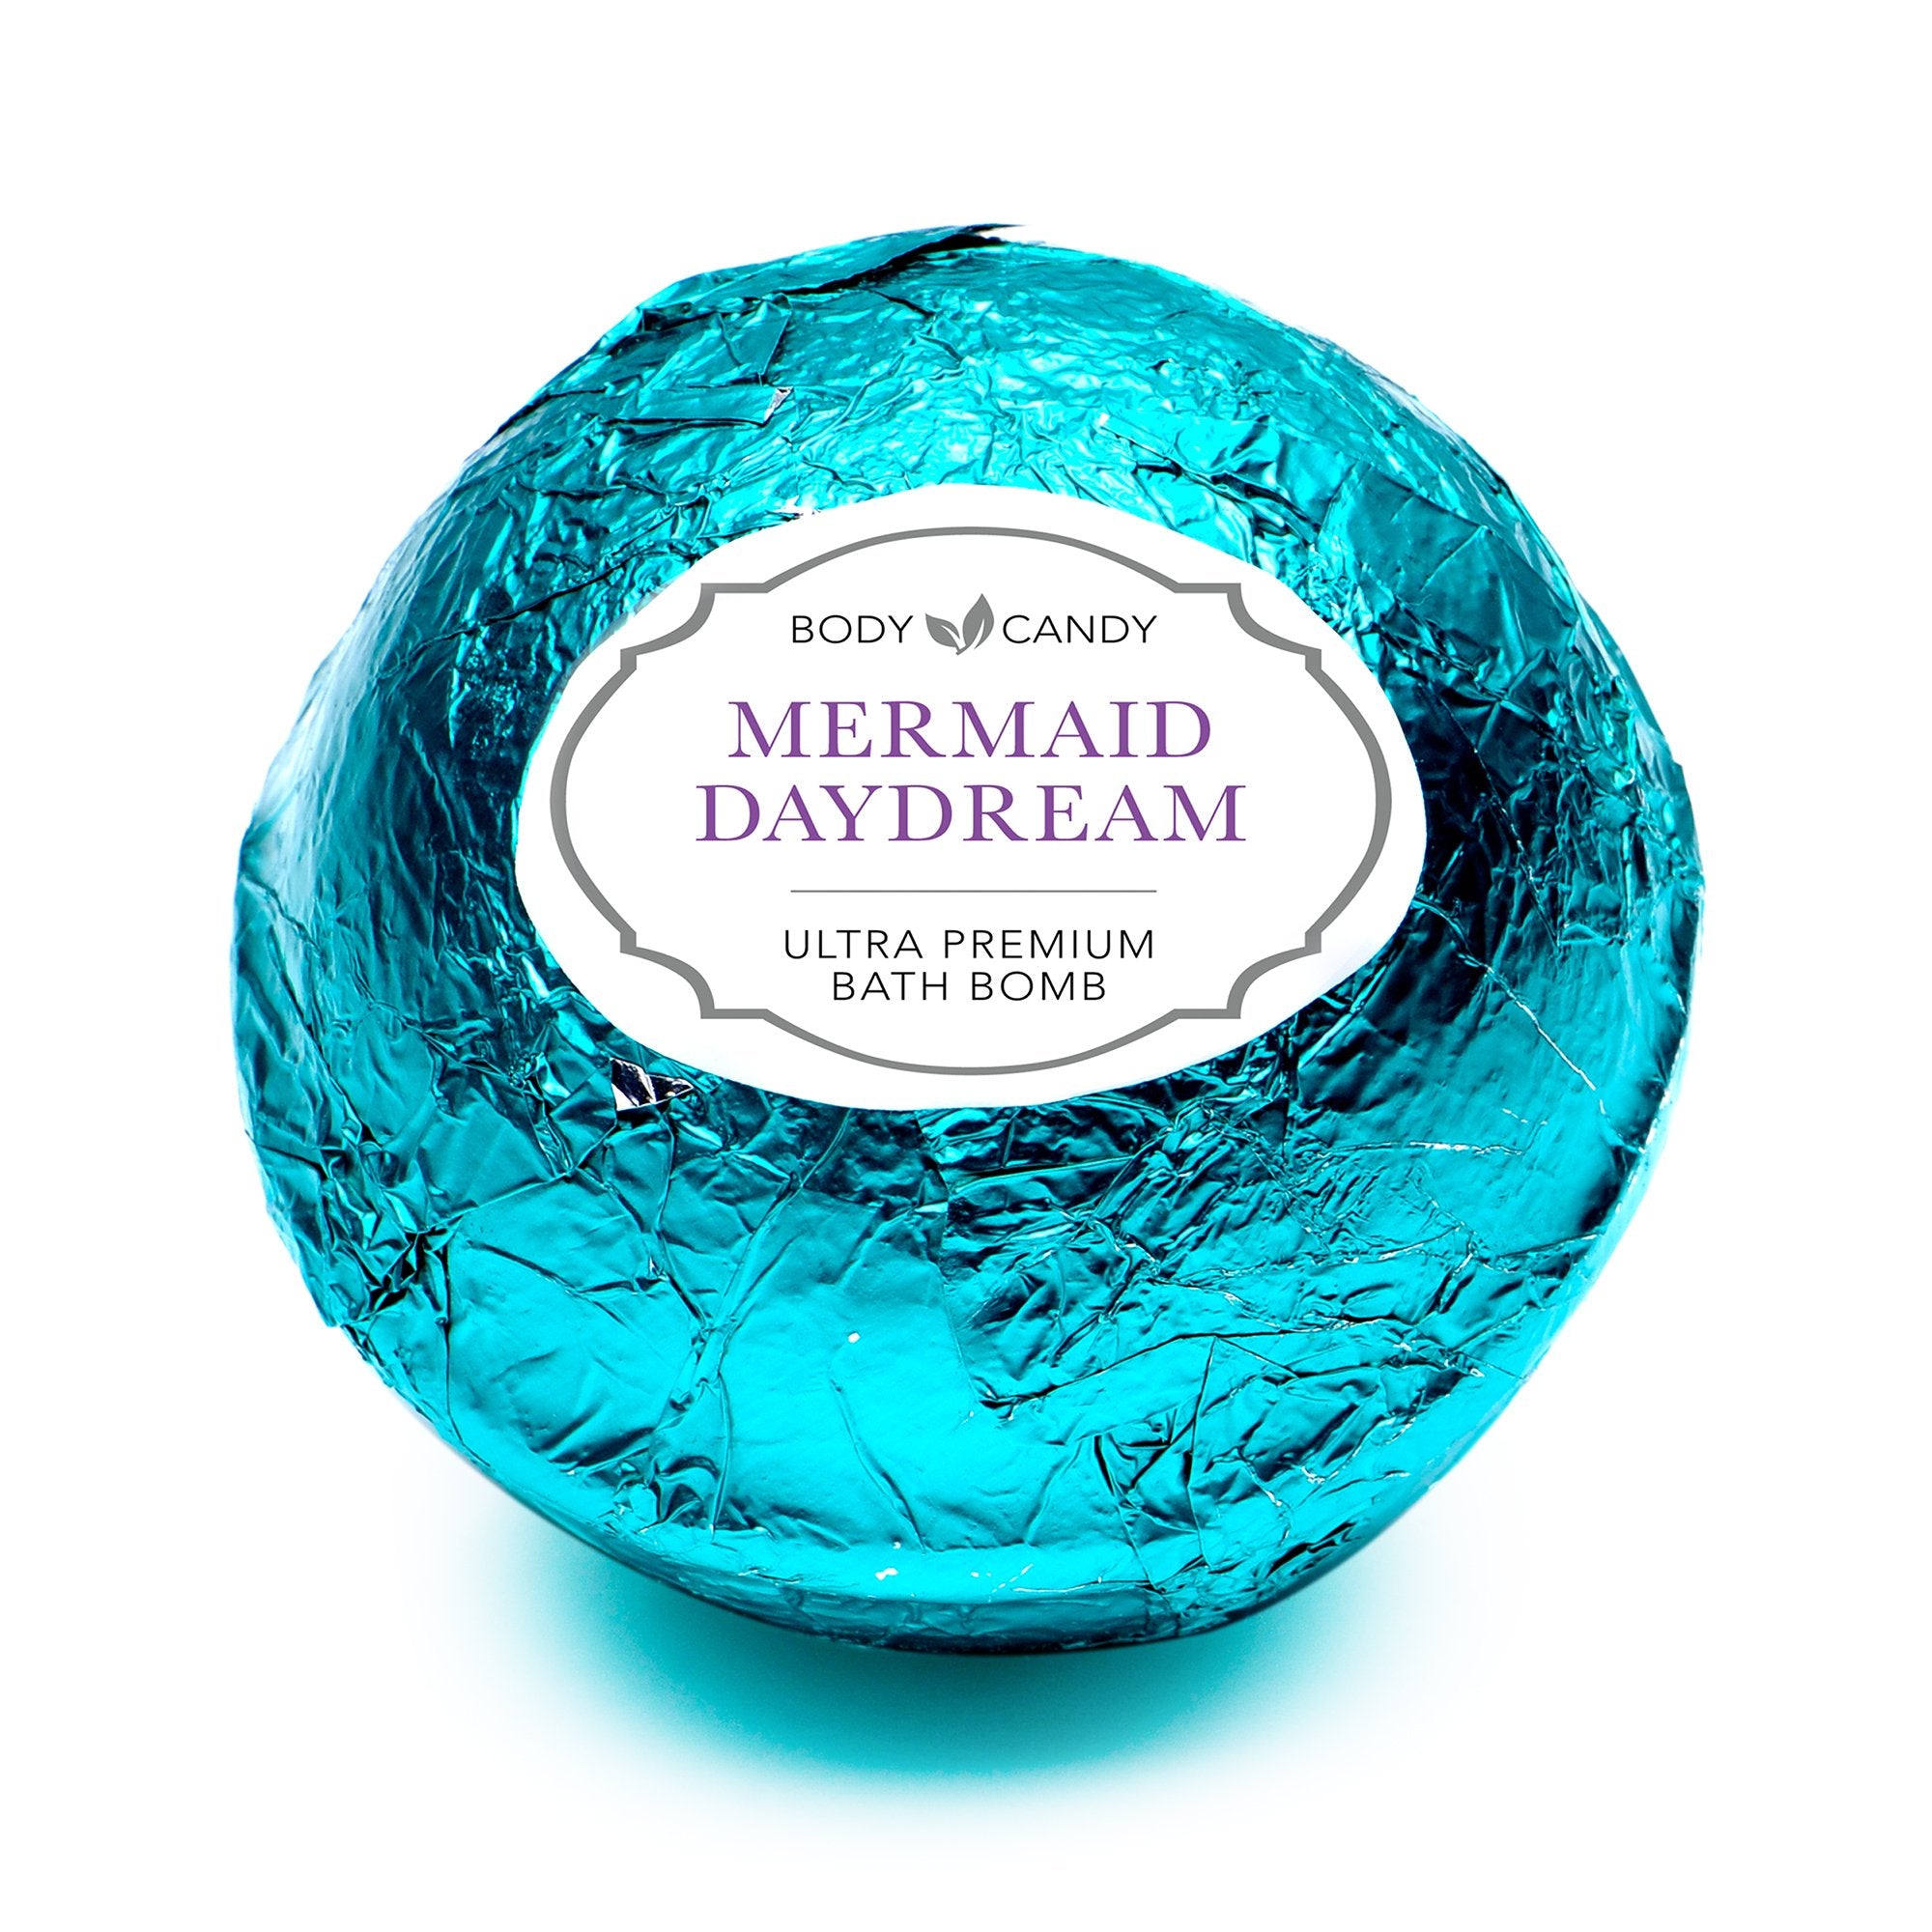 Mermaid Daydream Bath Bomb 5 ounces